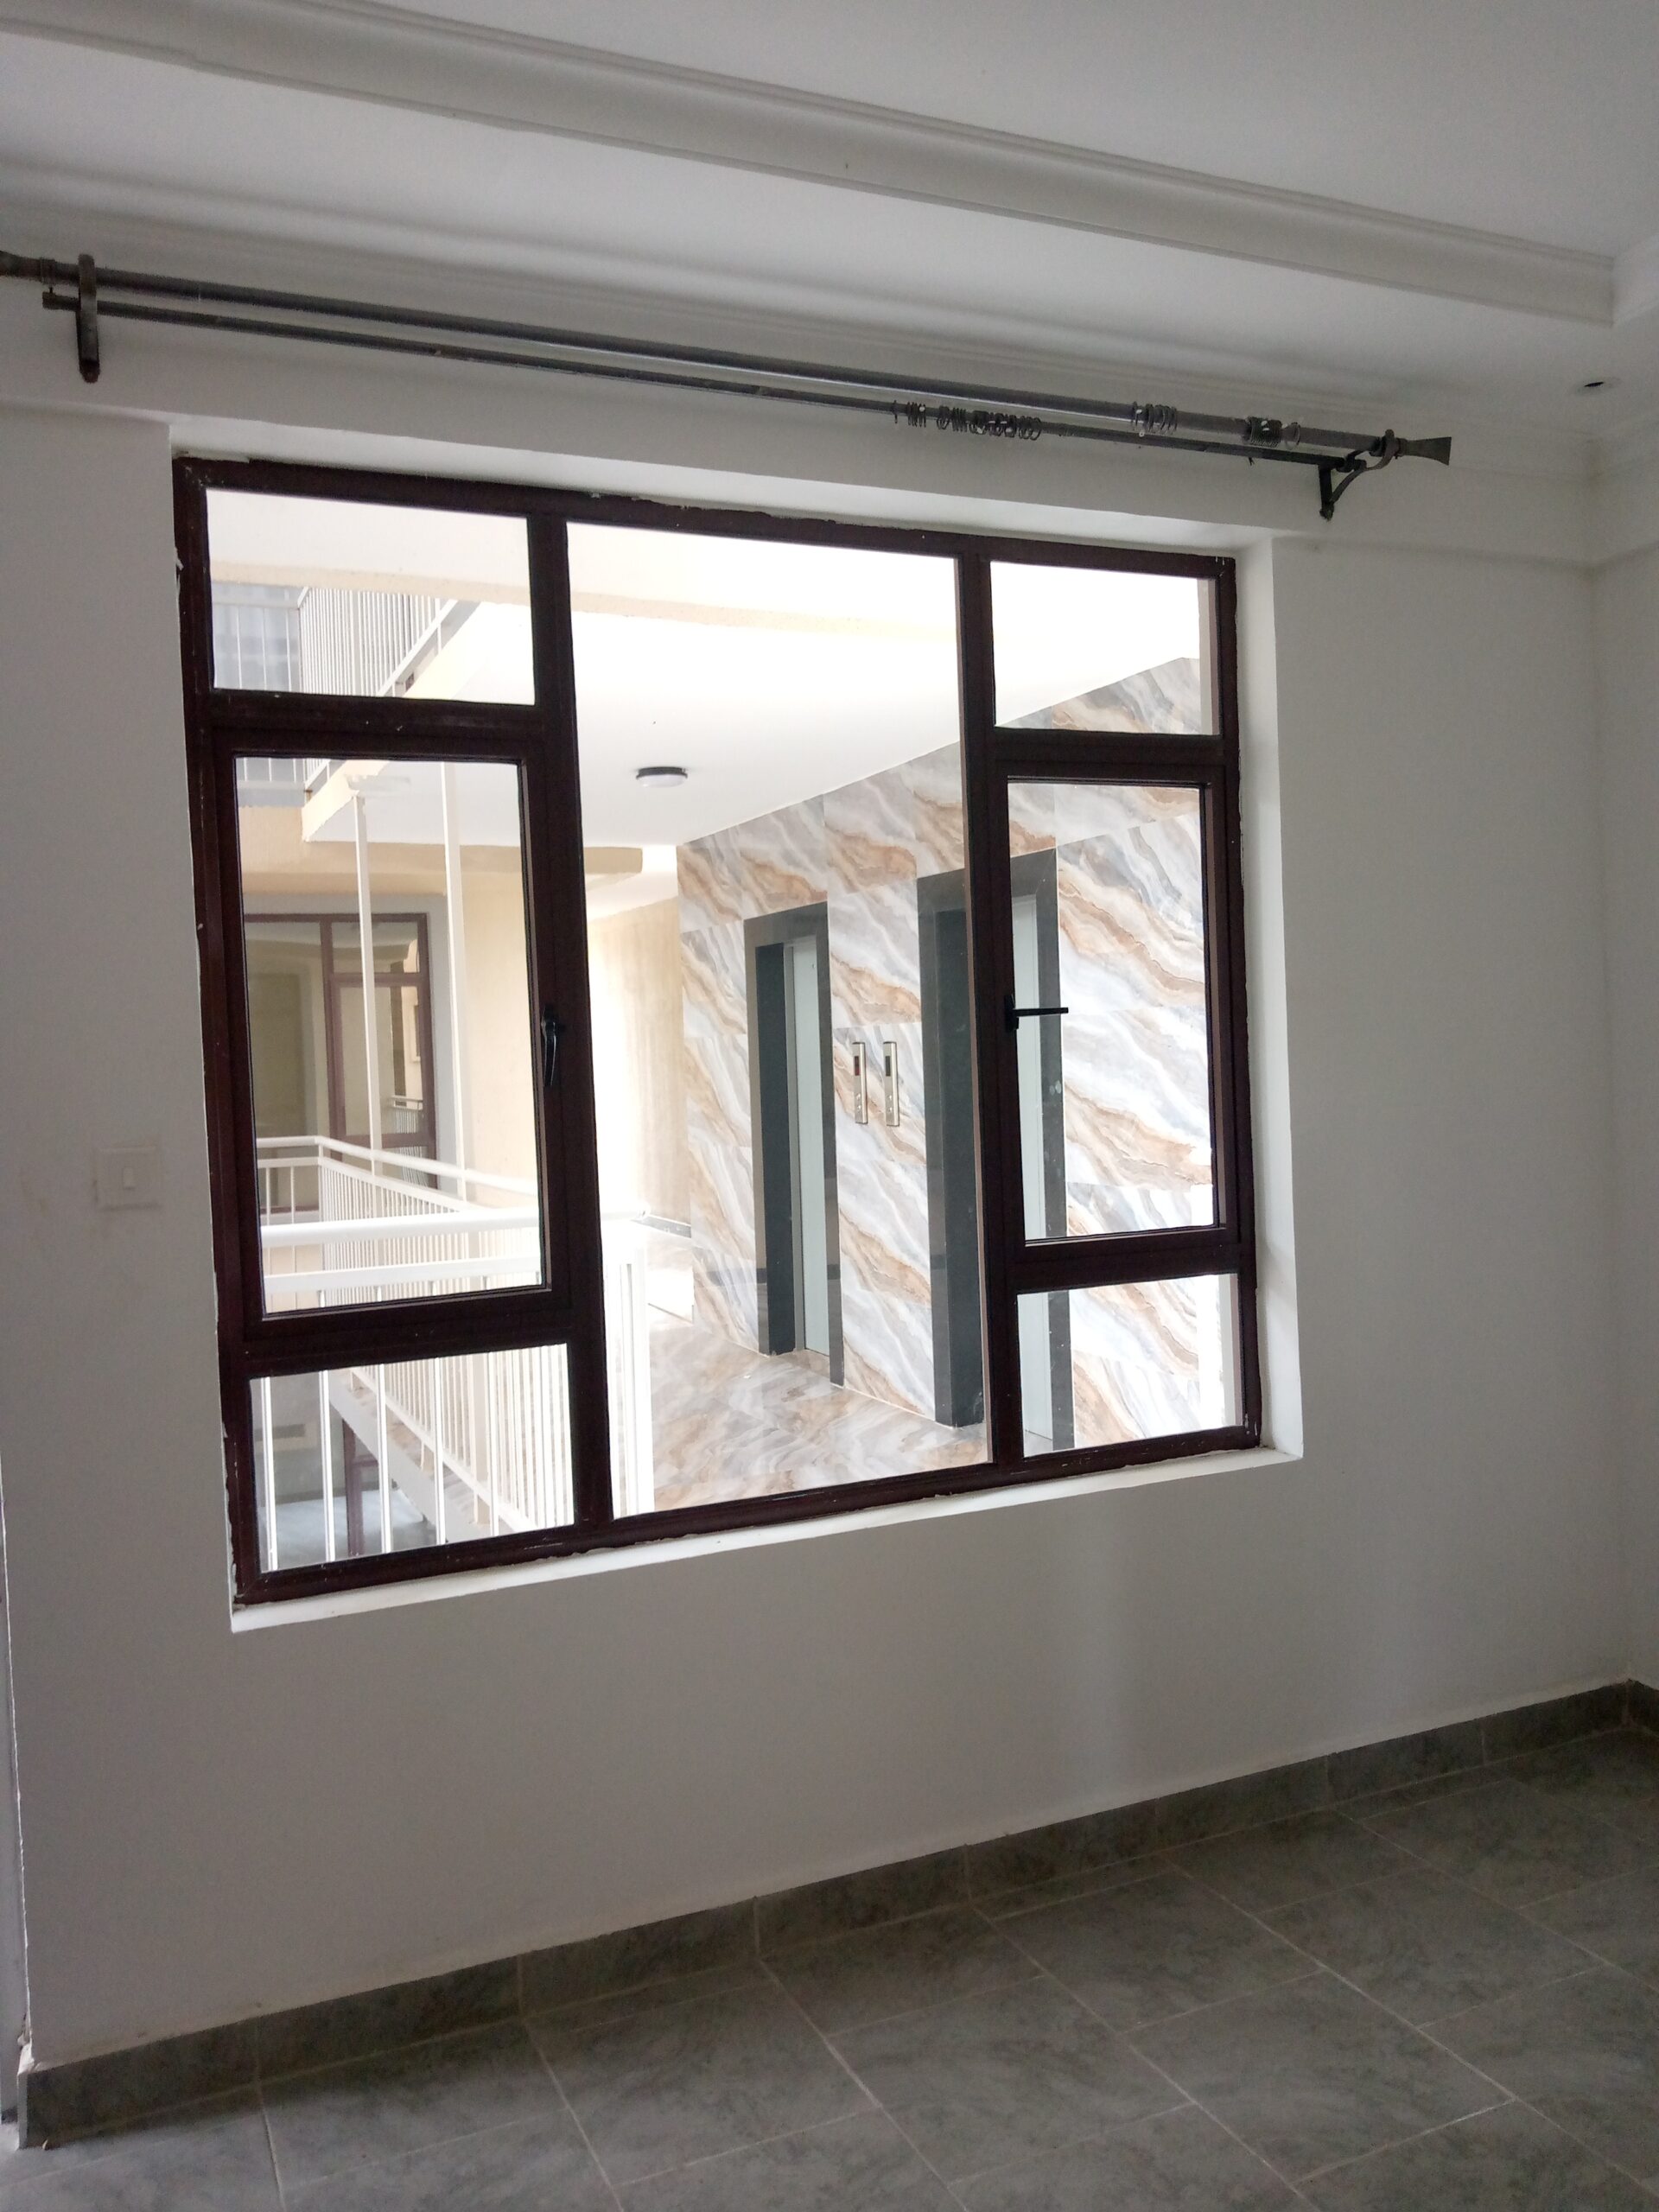 1 Bedroom Apartment at Ngong rd Dagoratti corner